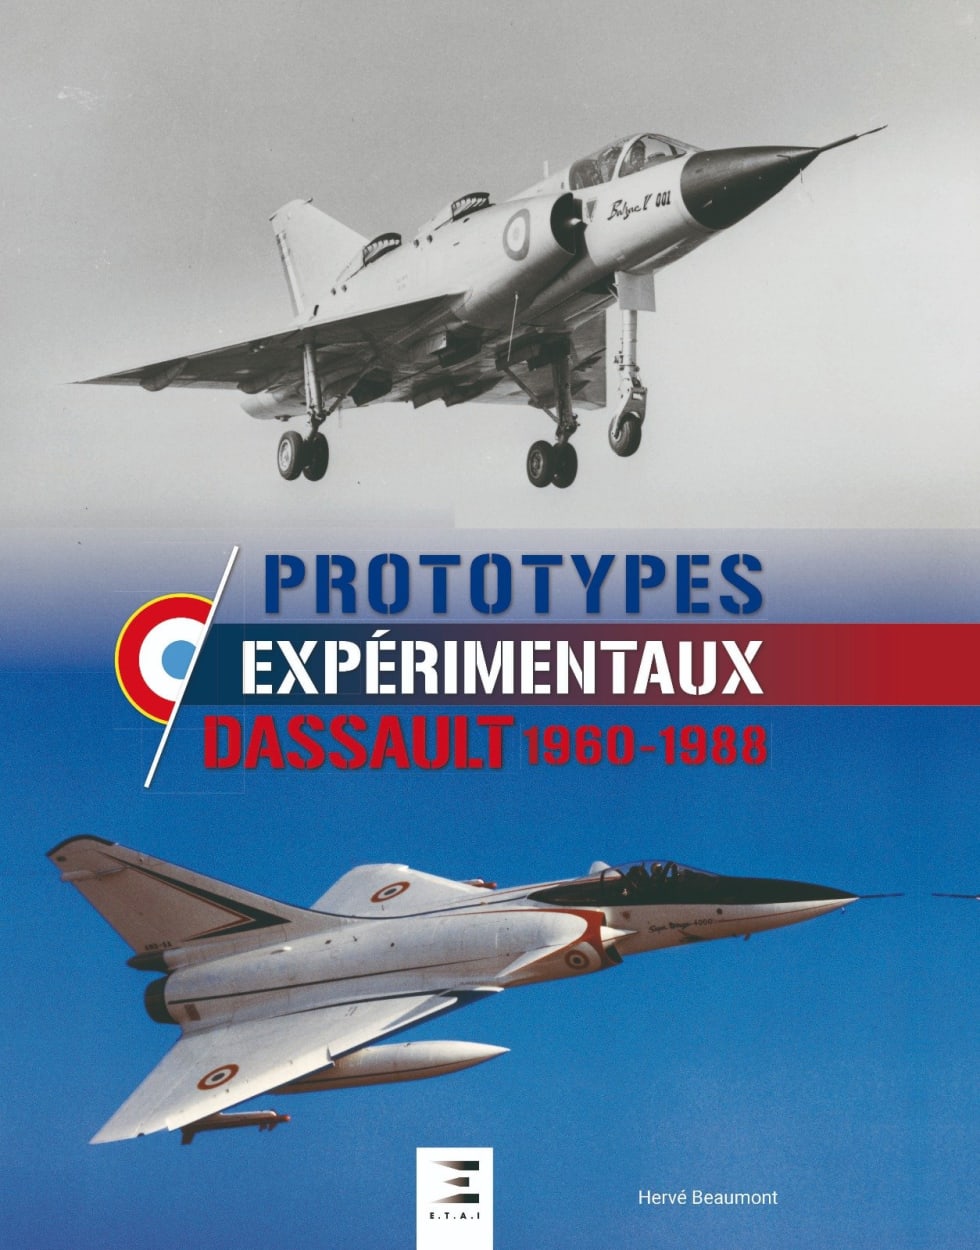 Prototypes experimentaux Dassault